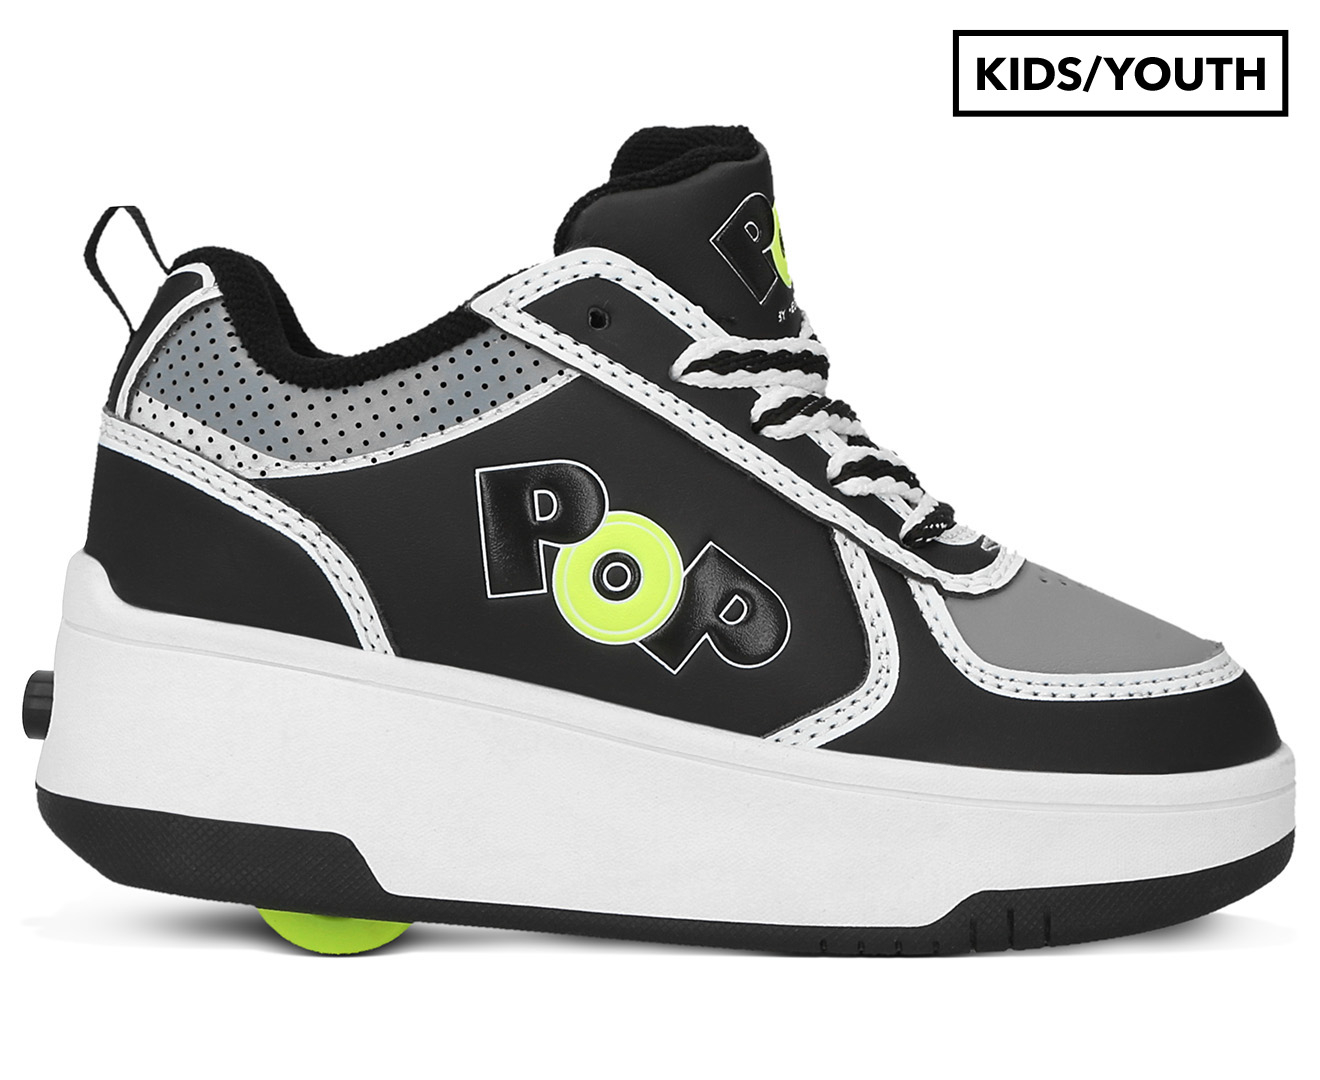 Heelys Boys' Strike Skate Shoes - Black/Grey/Yellow 